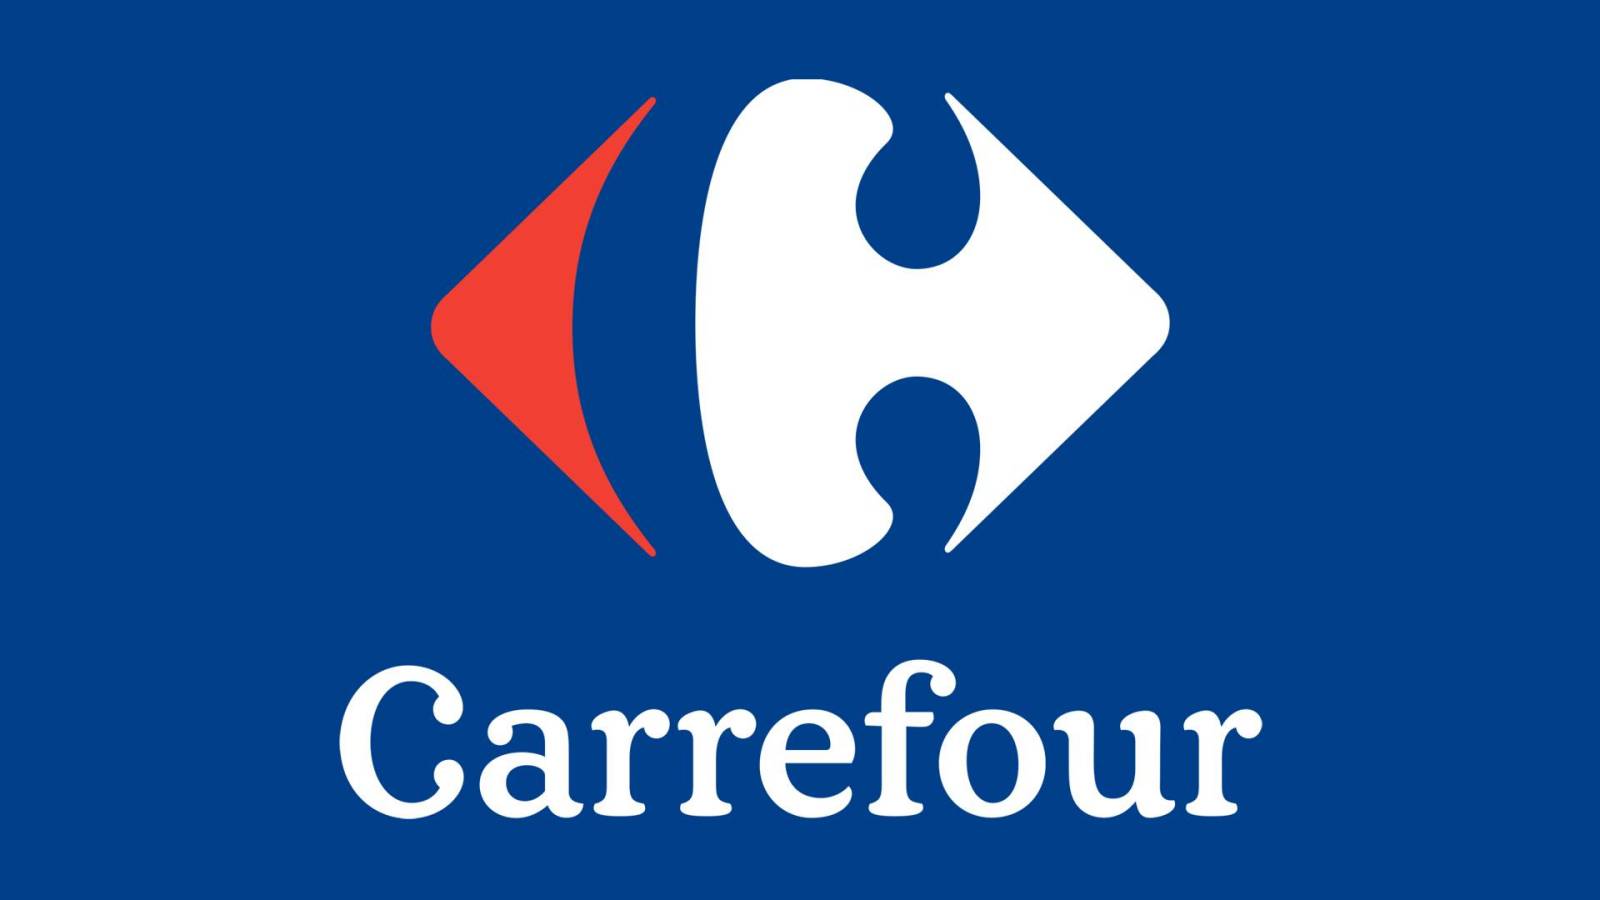 Importante anuncio OFICIAL de Carrefour dirigido a clientes rumanos